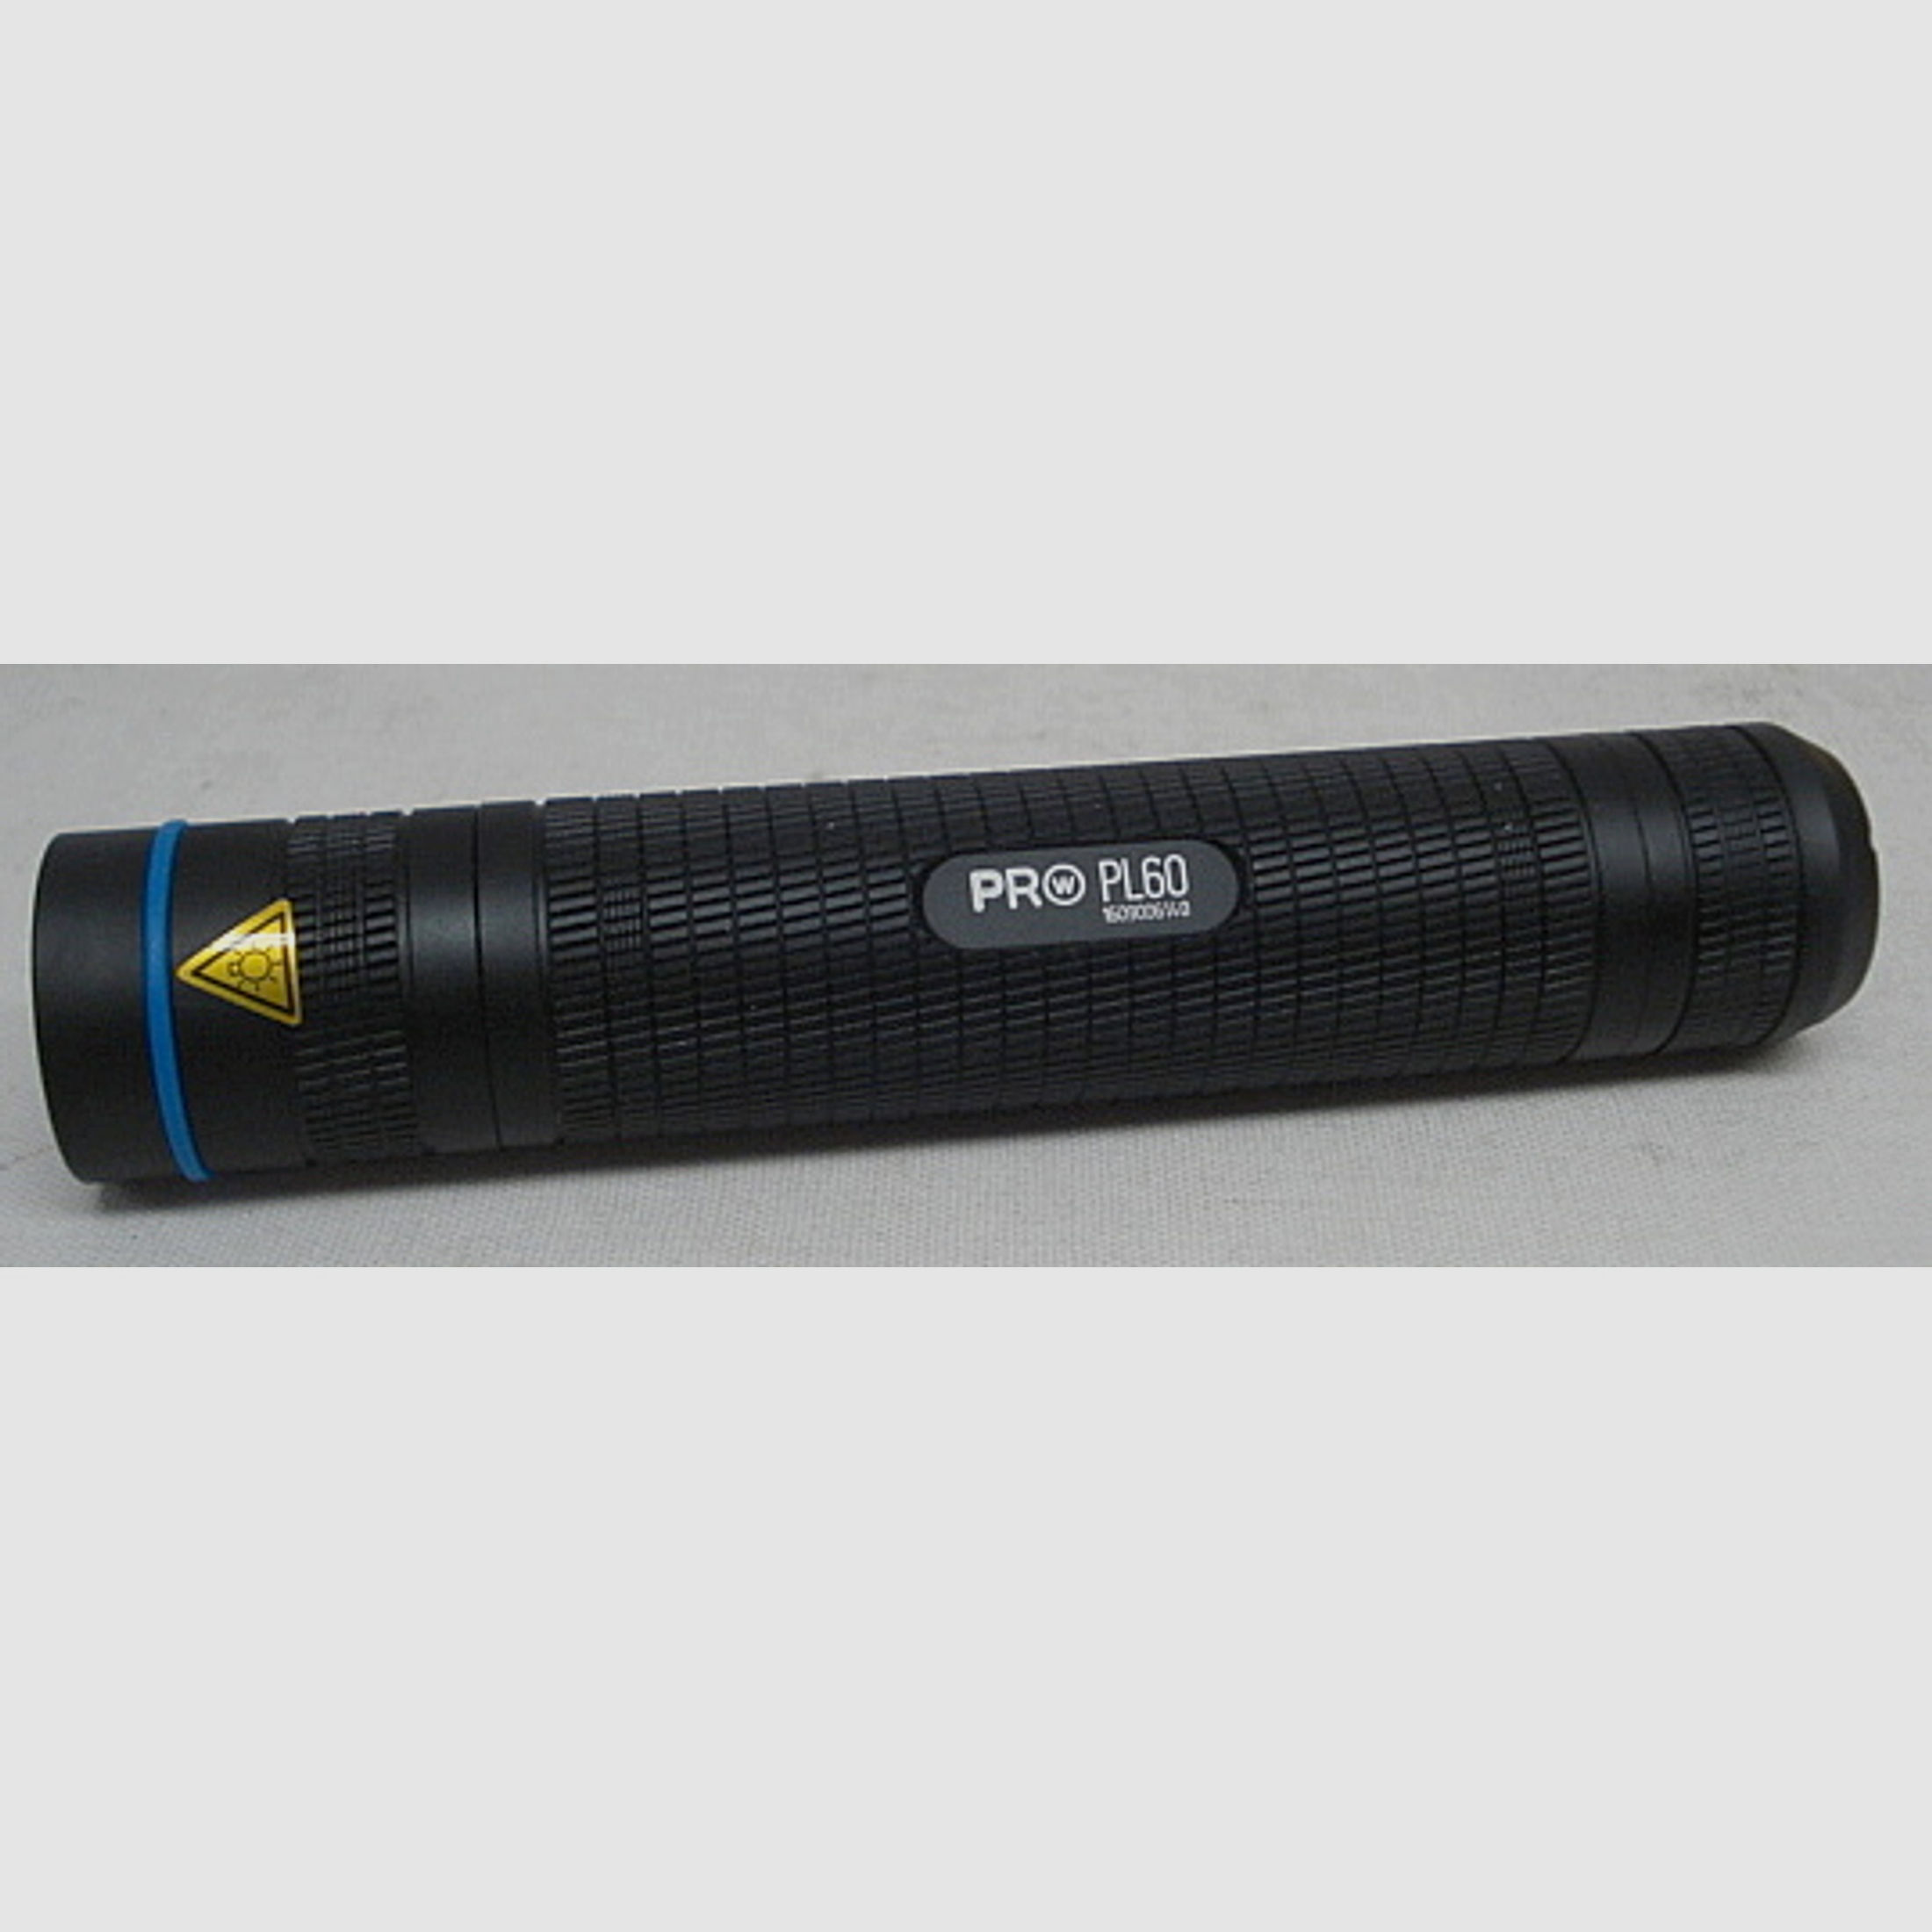 Pro PL60 - 425 Lumen - inkl. 2x CR123 Batterie